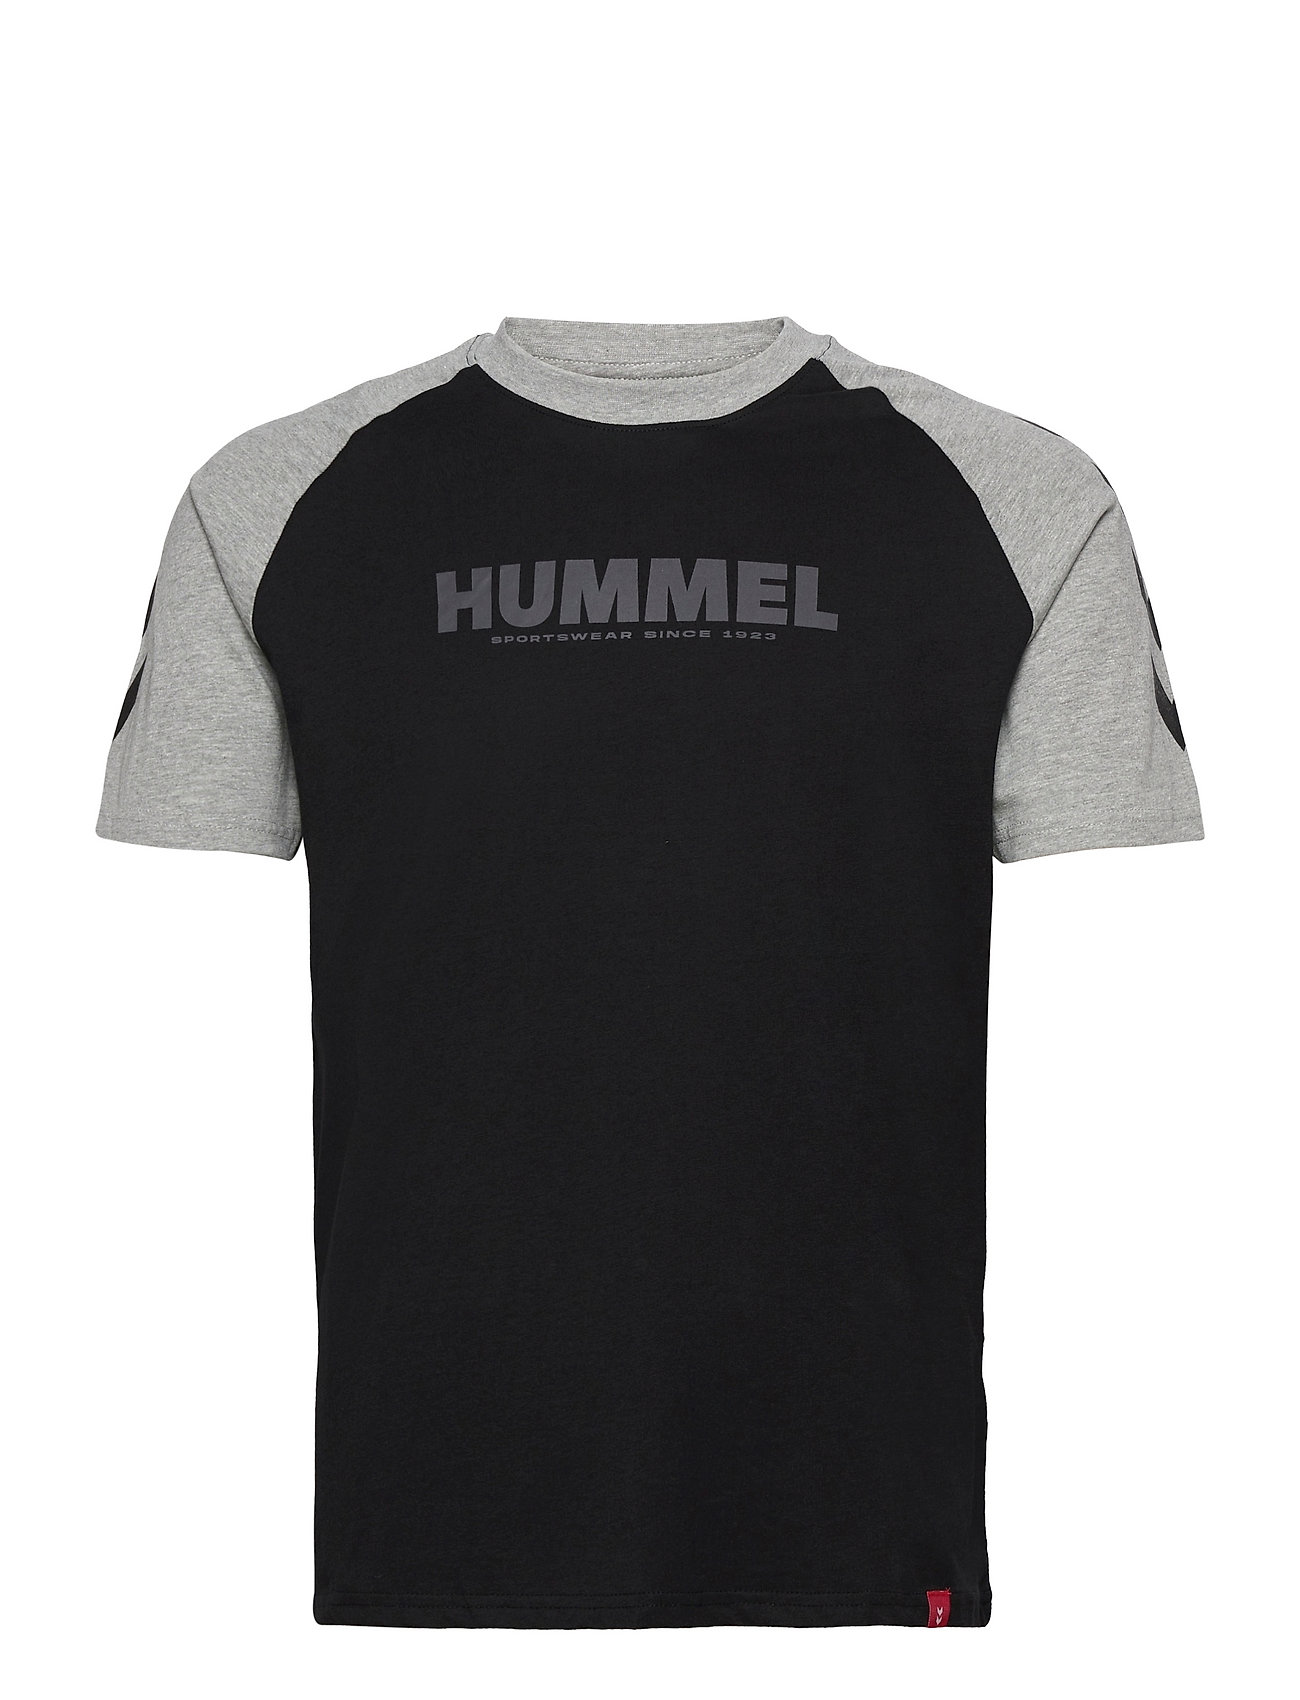 Hummel Blocked T-shirt - T-Shirts Boozt.com